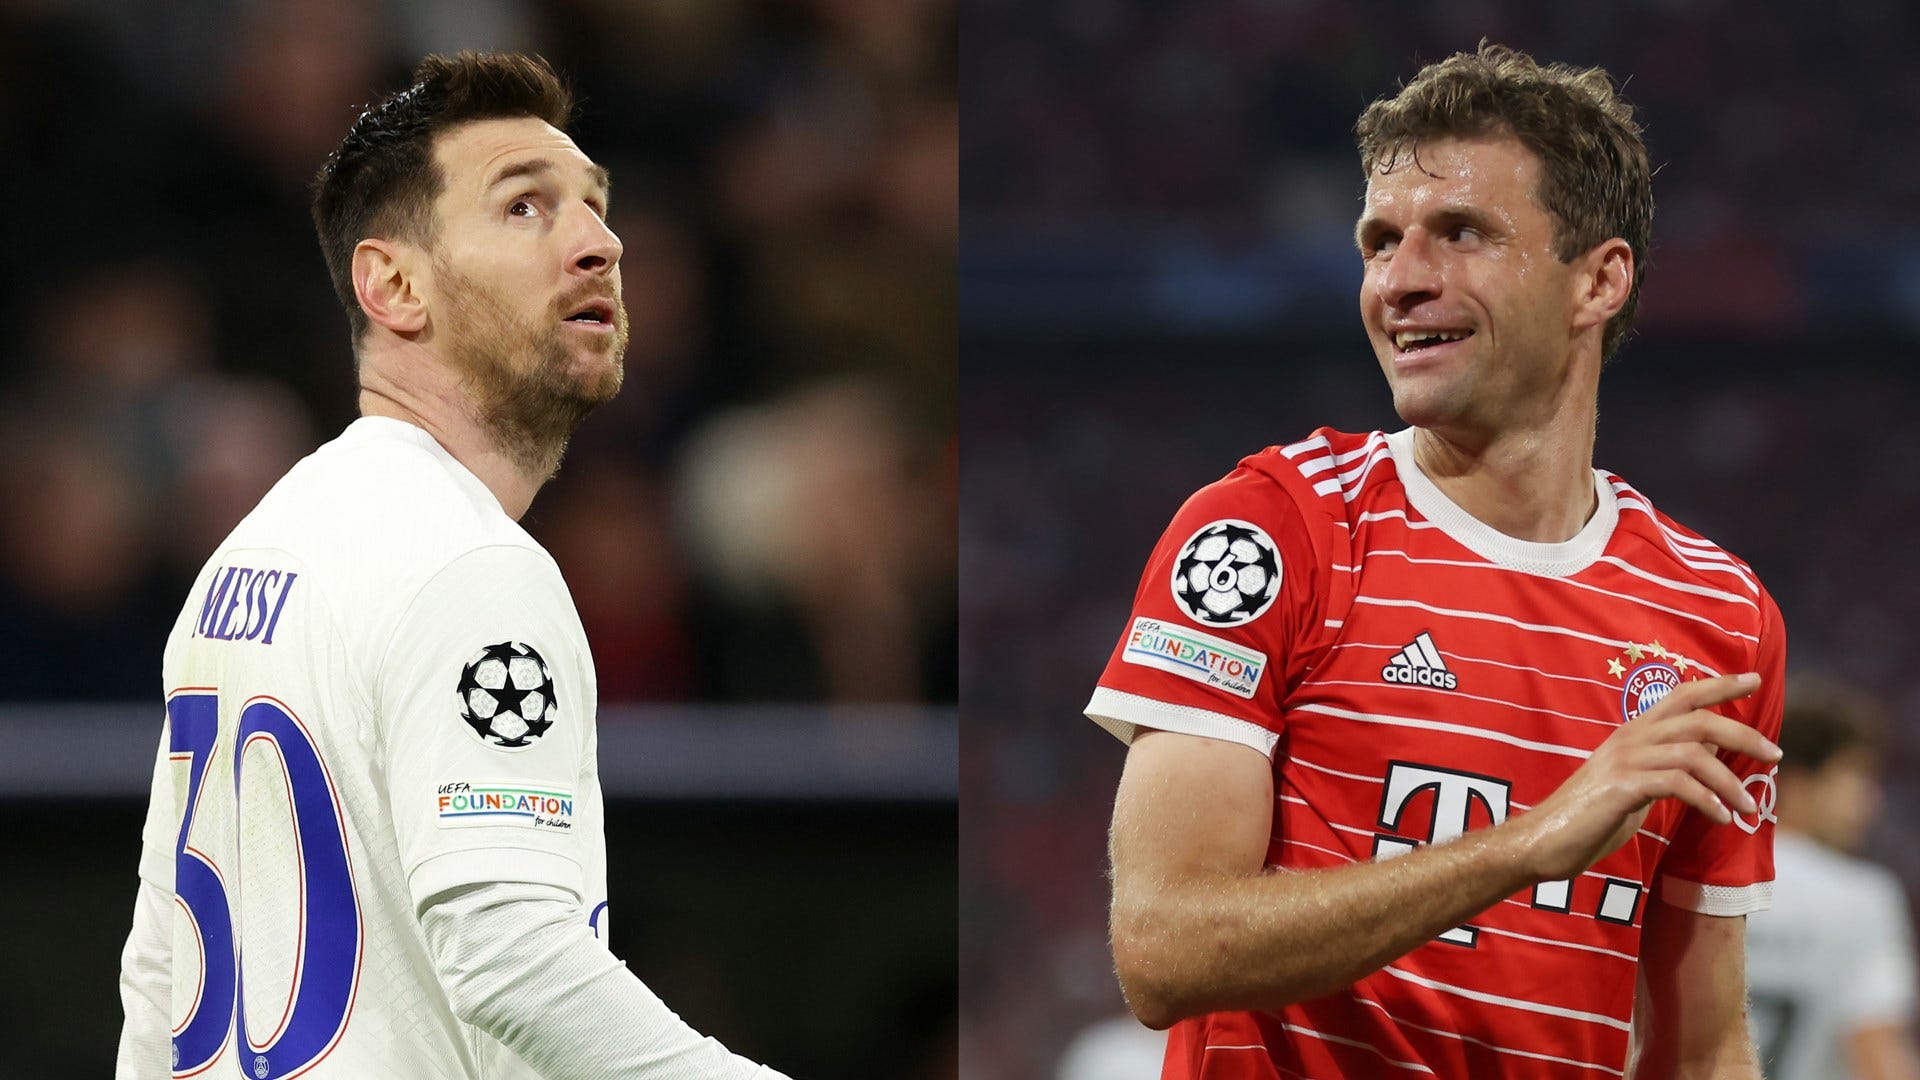 Champions League: Semifinais têm Messi x Cristiano Ronaldo e PSG x Bayern  de Munique